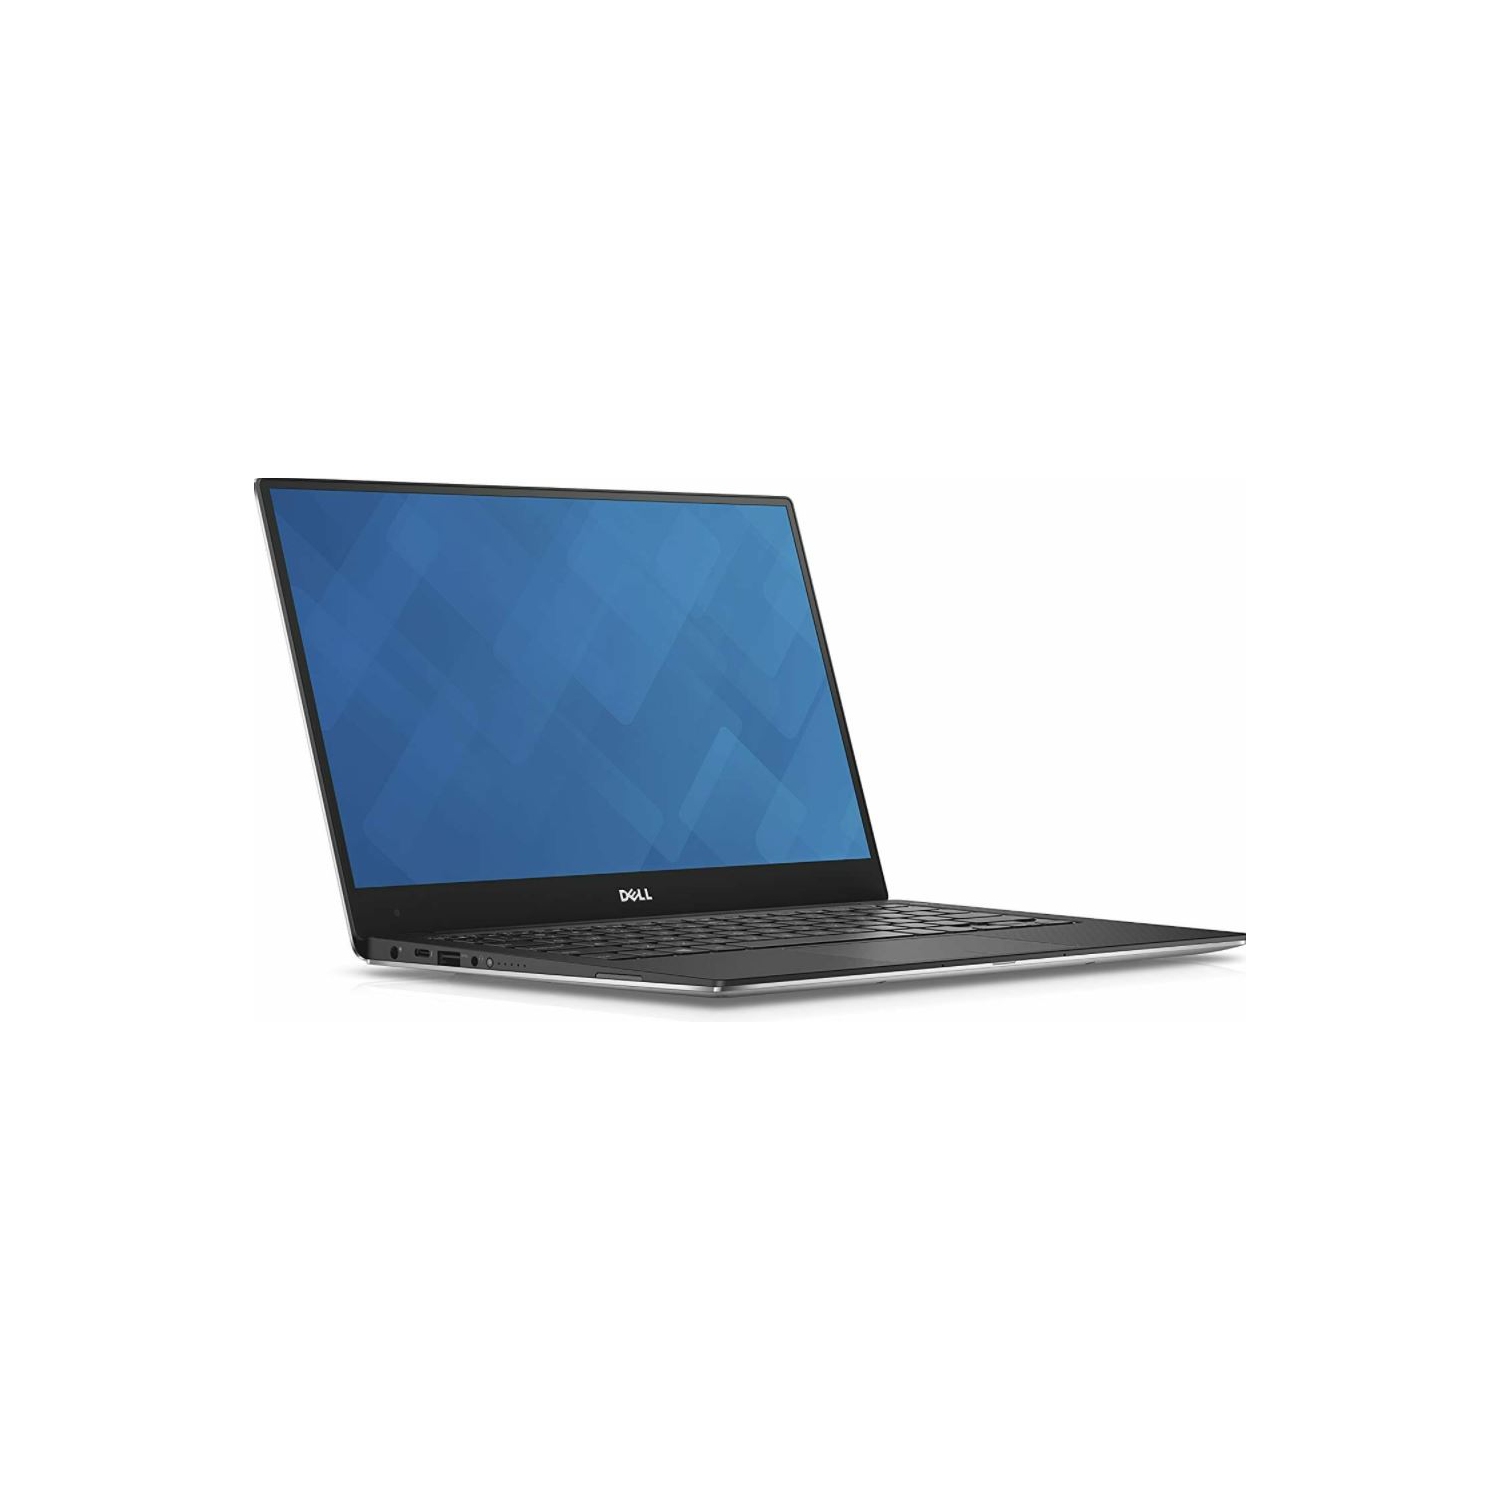 Refurbished (Good) - Dell XPS 13 9360 13" Ultra-Thin Laptop, 4K UHD - Intel Core i7-7560U, 2.4GHz, 8GB RAM, 256GB SSD, Windows 10 Home